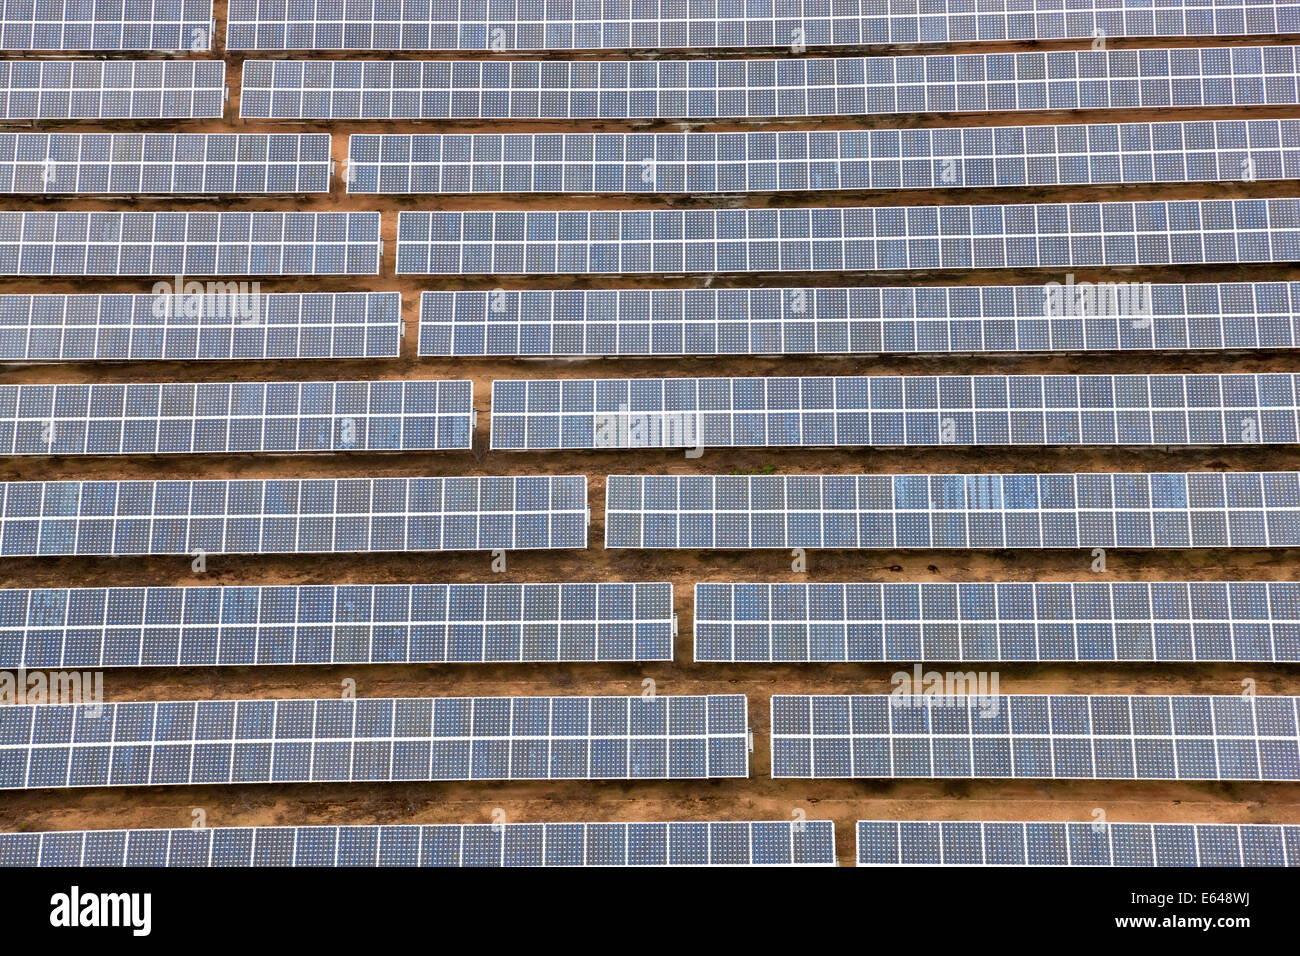 Aerial view  of solar panels Huelva Province, Spain Stock Photo